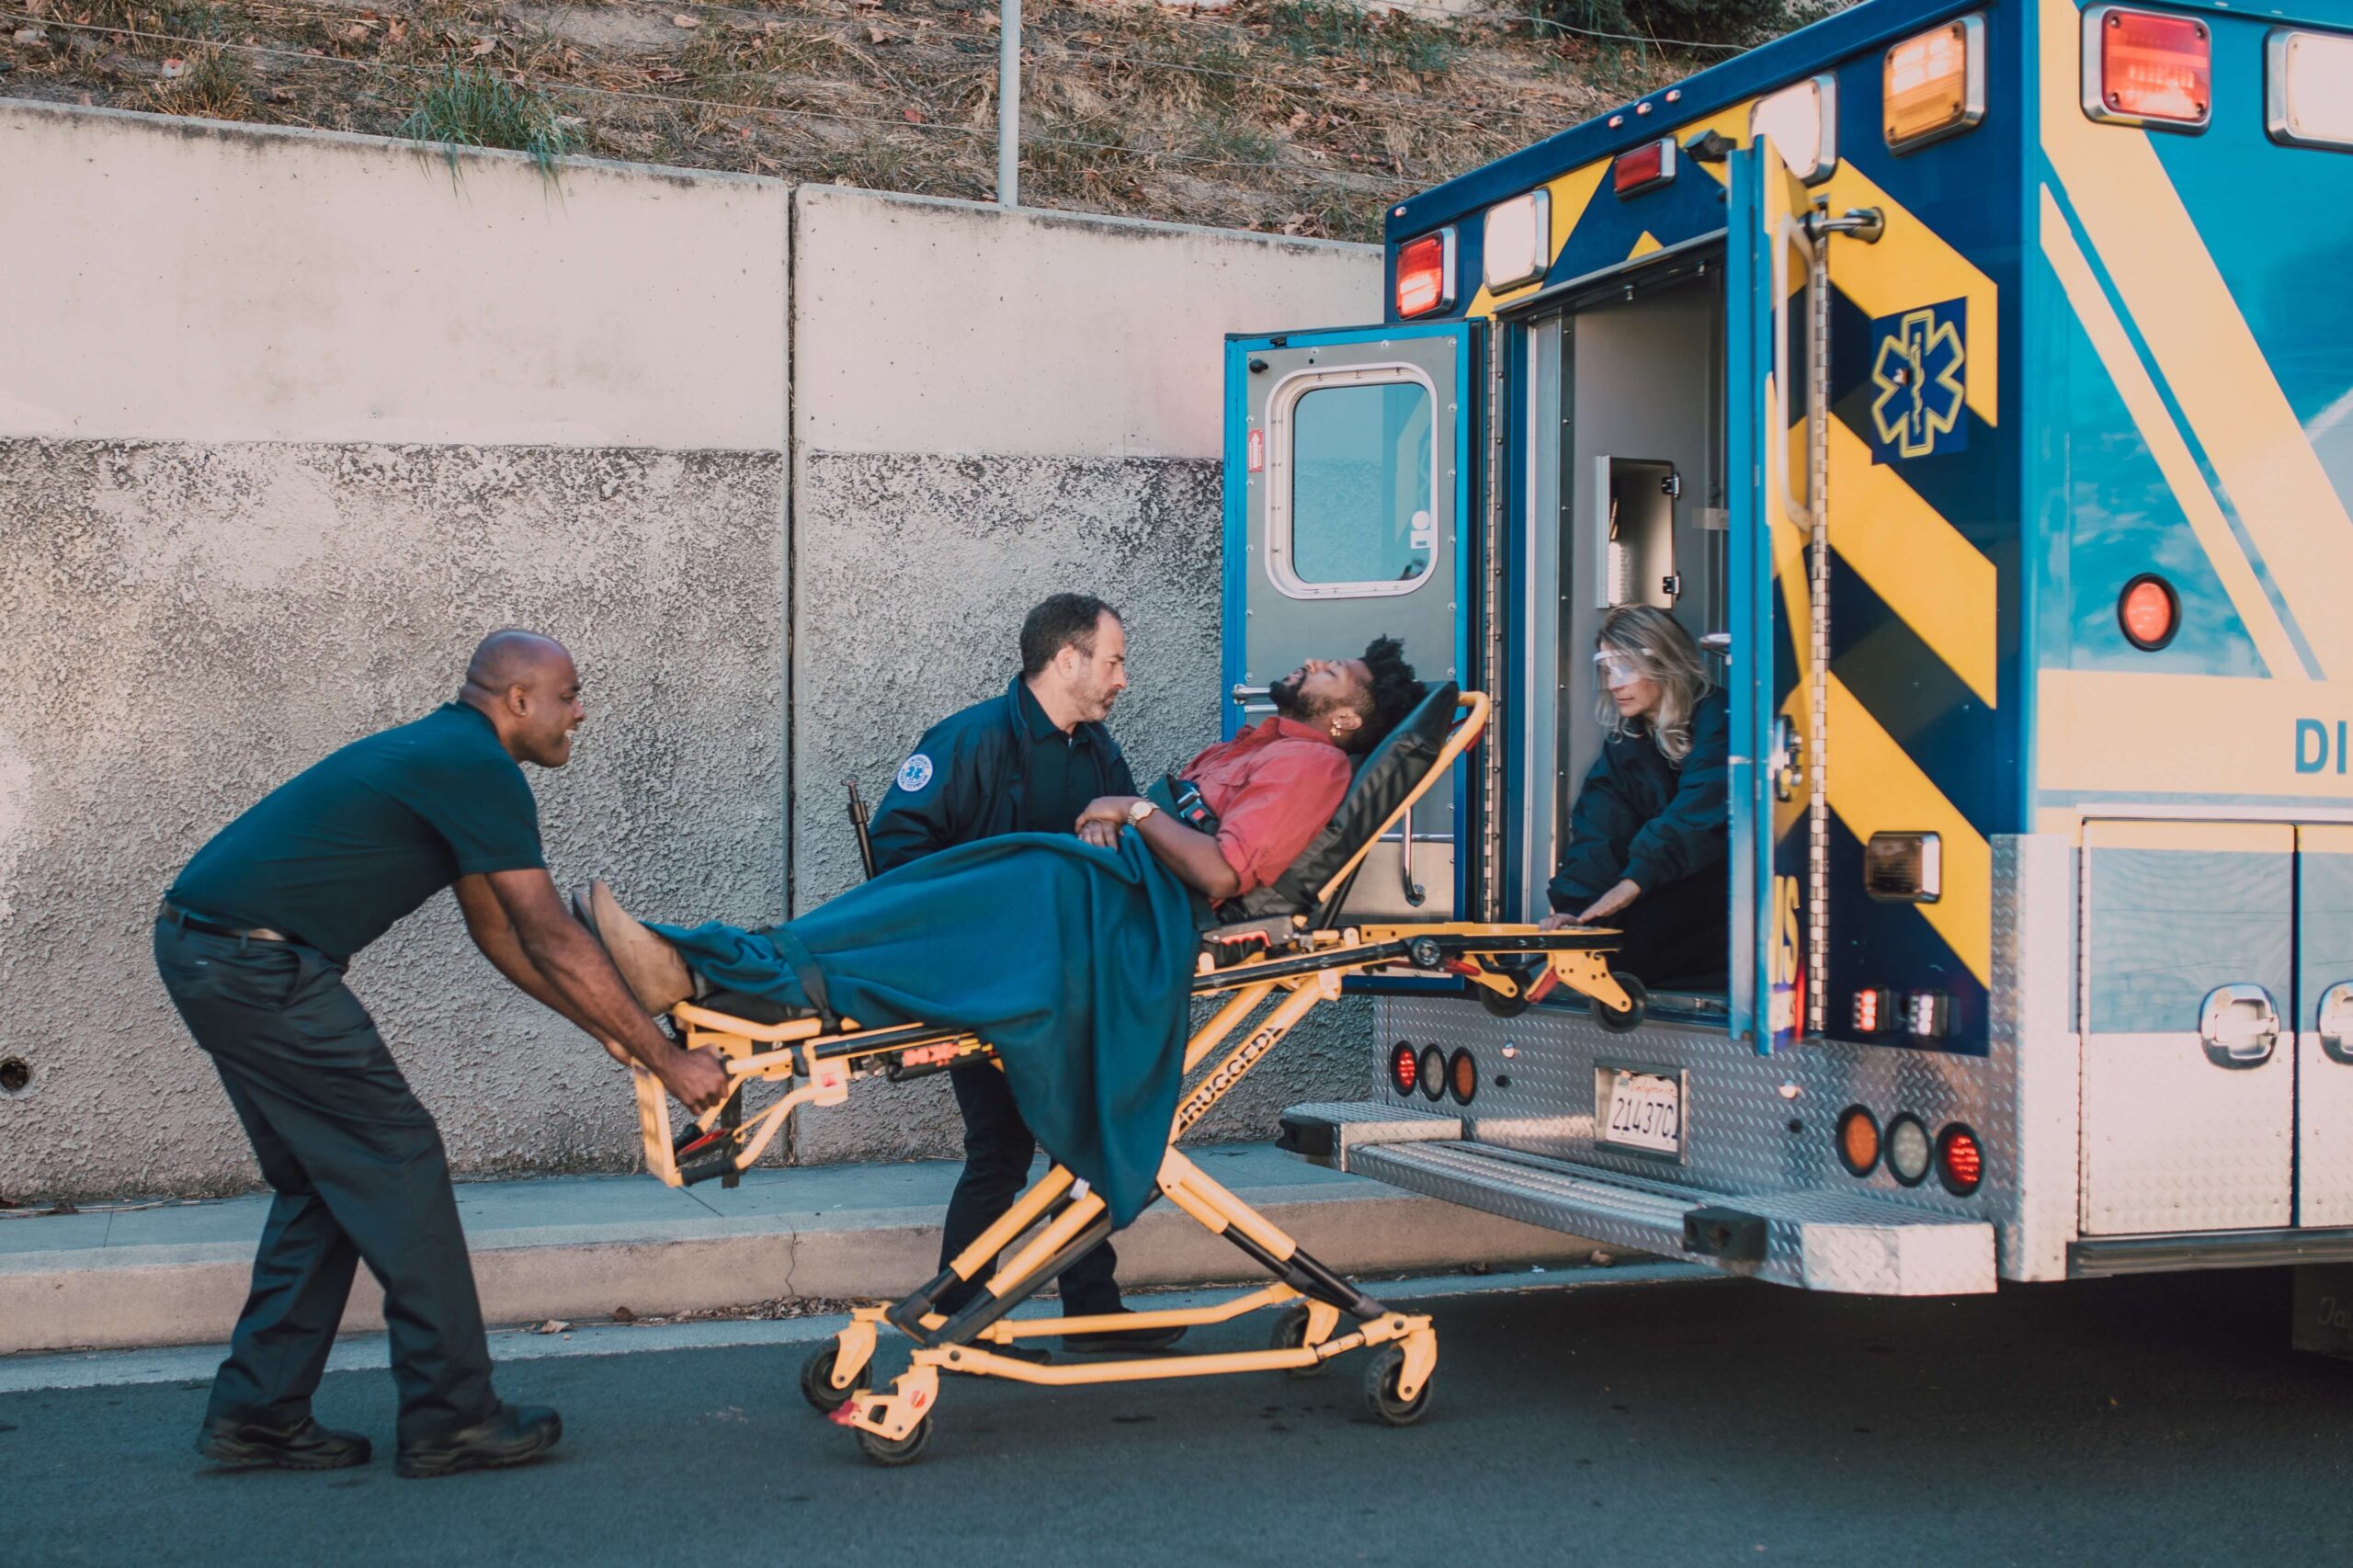 numero da ambulancia emergência